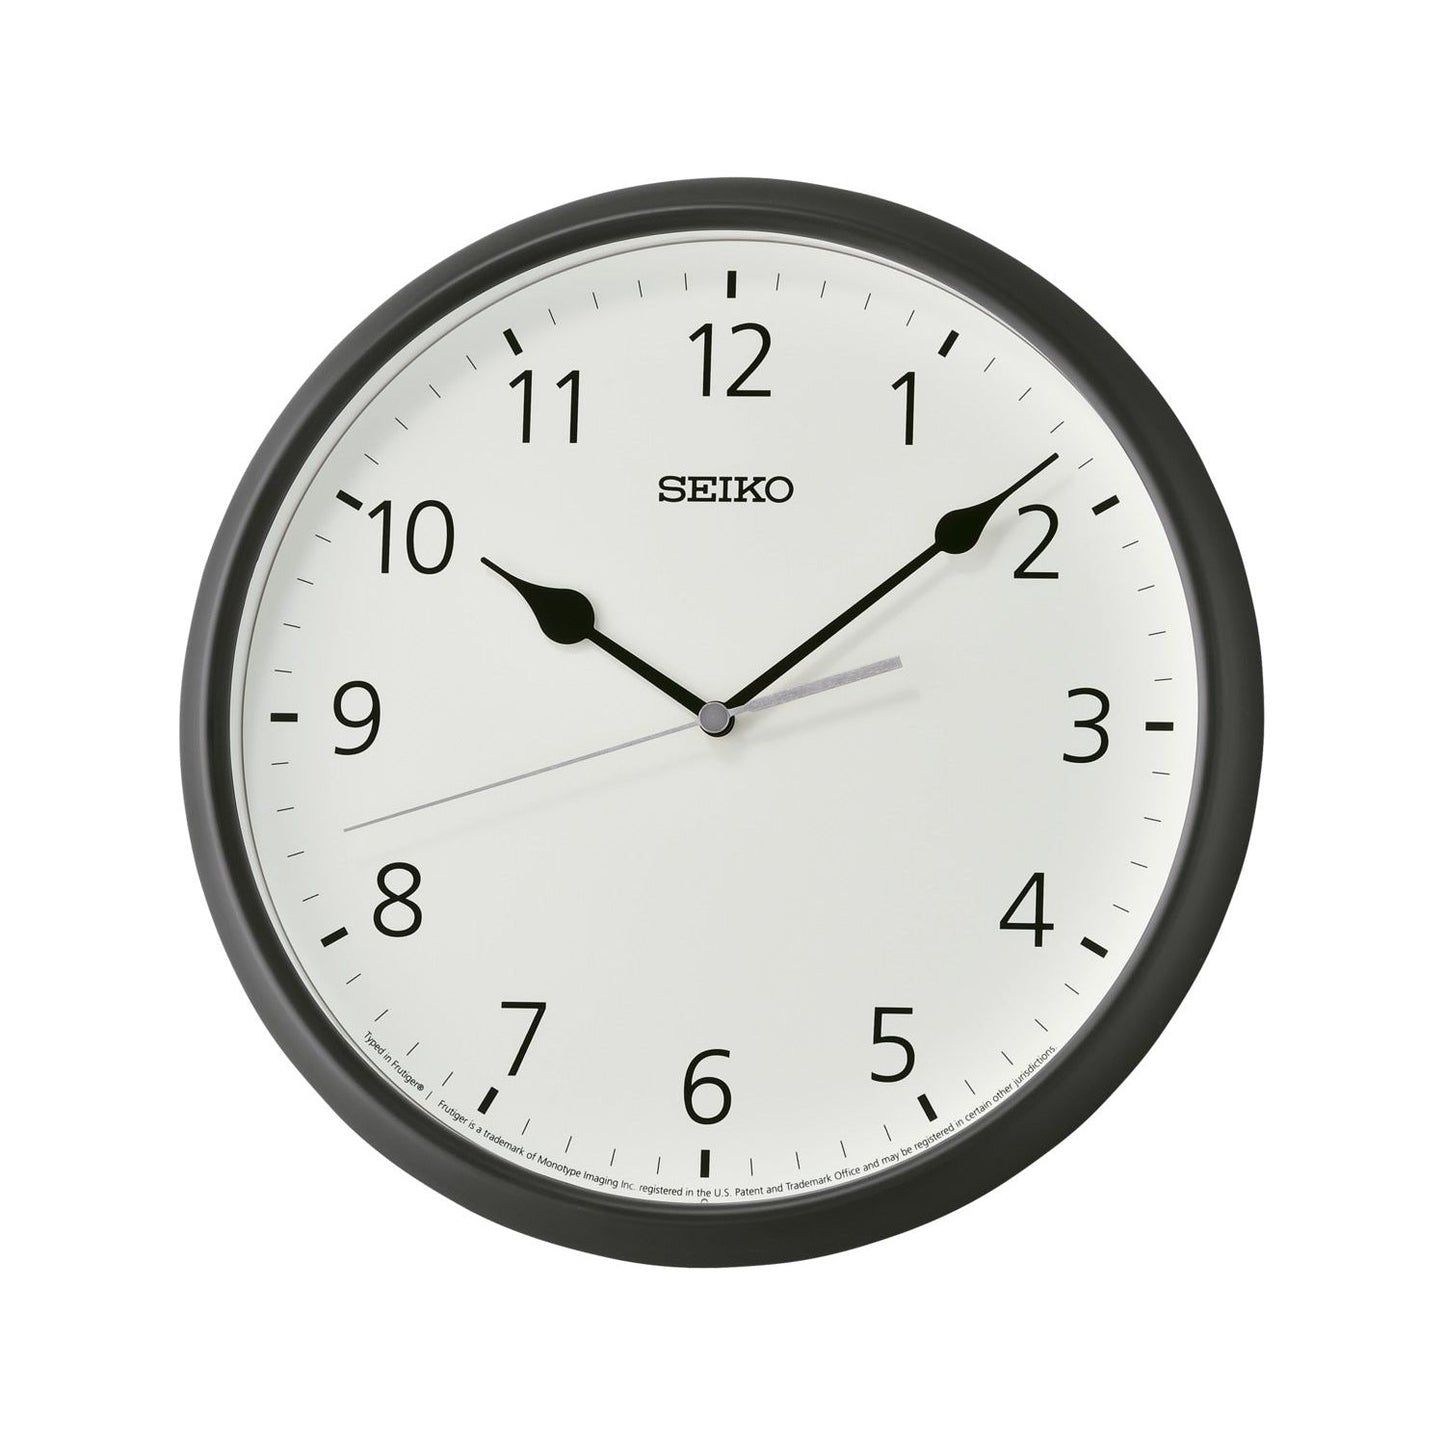 SEIKO CLOCKS SEIKO CLOCKS WATCHES Mod. QXA796K WATCHES seiko-clocks-watches-mod-qxa796k-1